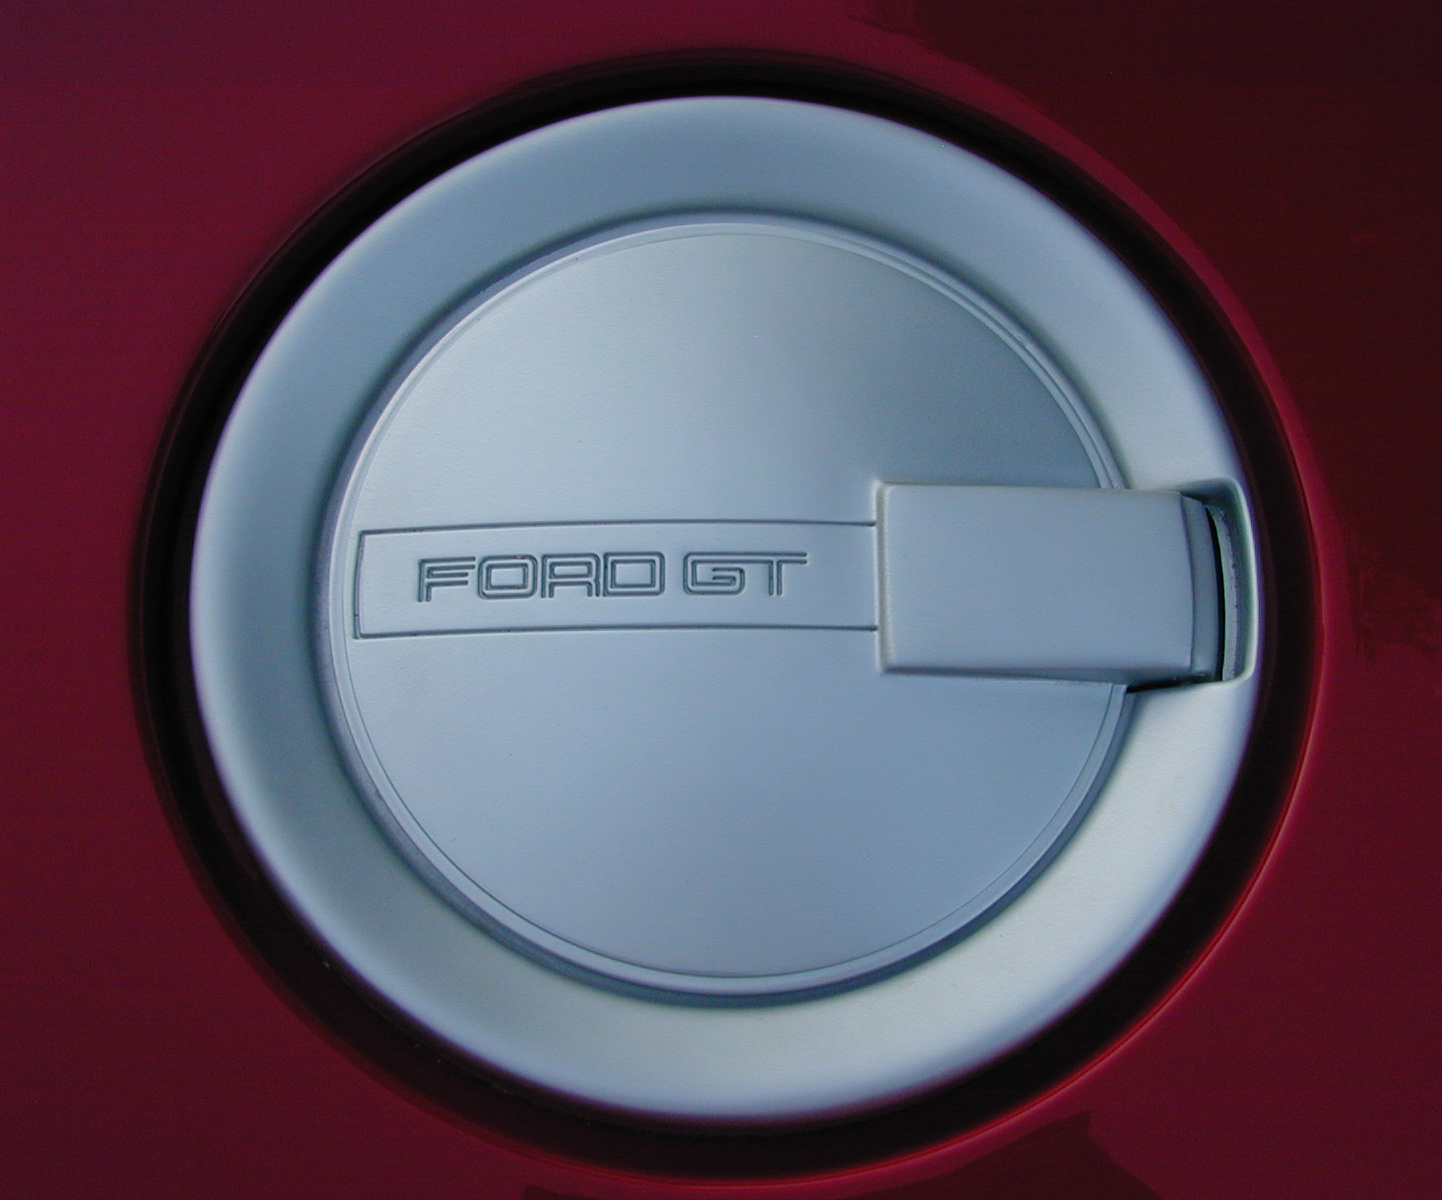 Prototype Ford GT Fuel Cap